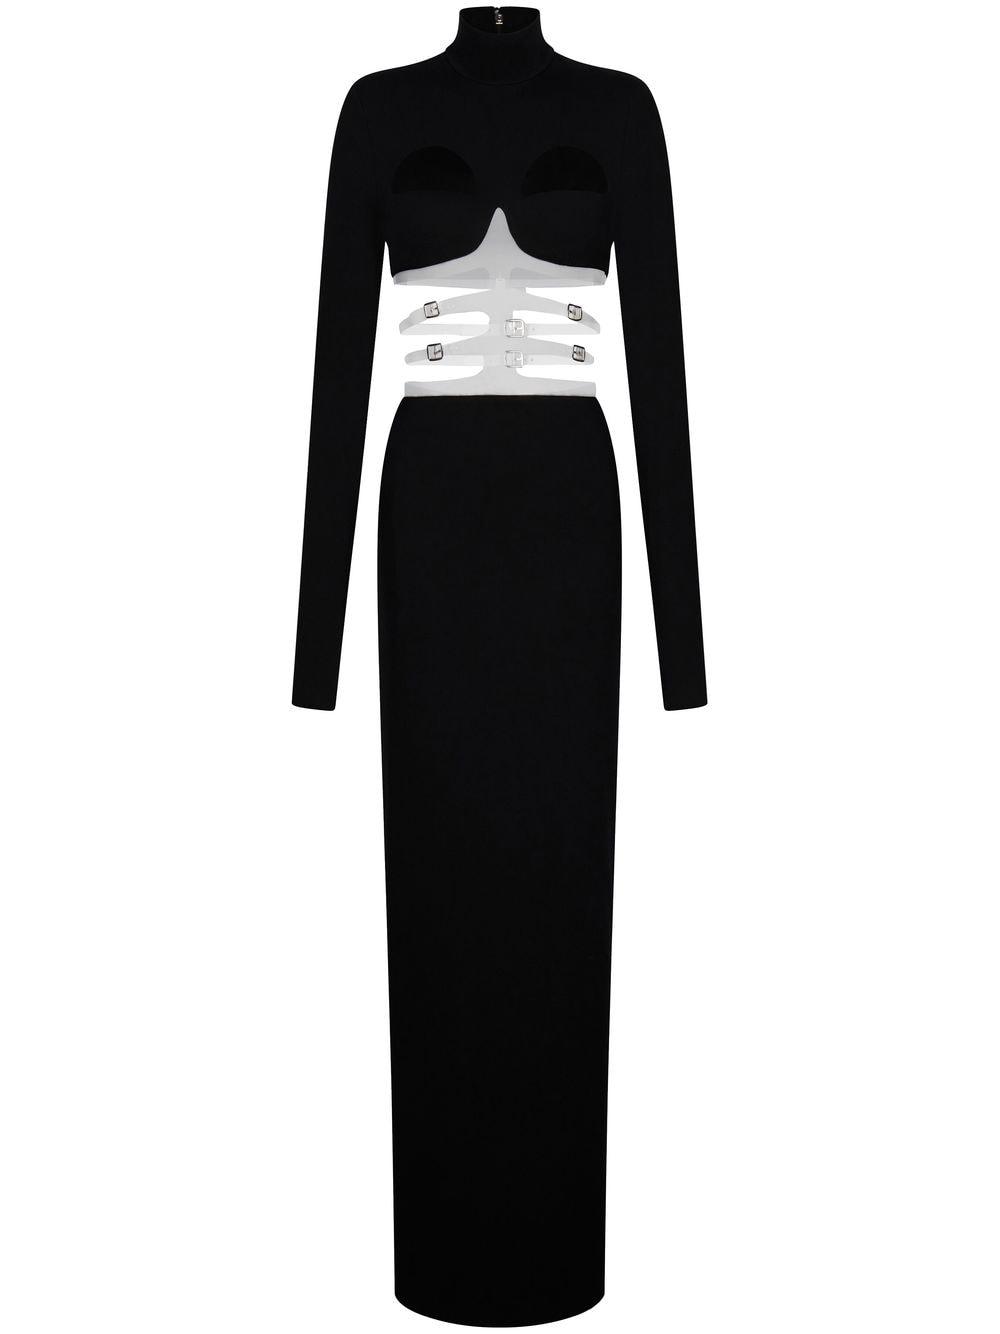 Christopher Kane Rib Cage Maxi Dress in Black | Lyst